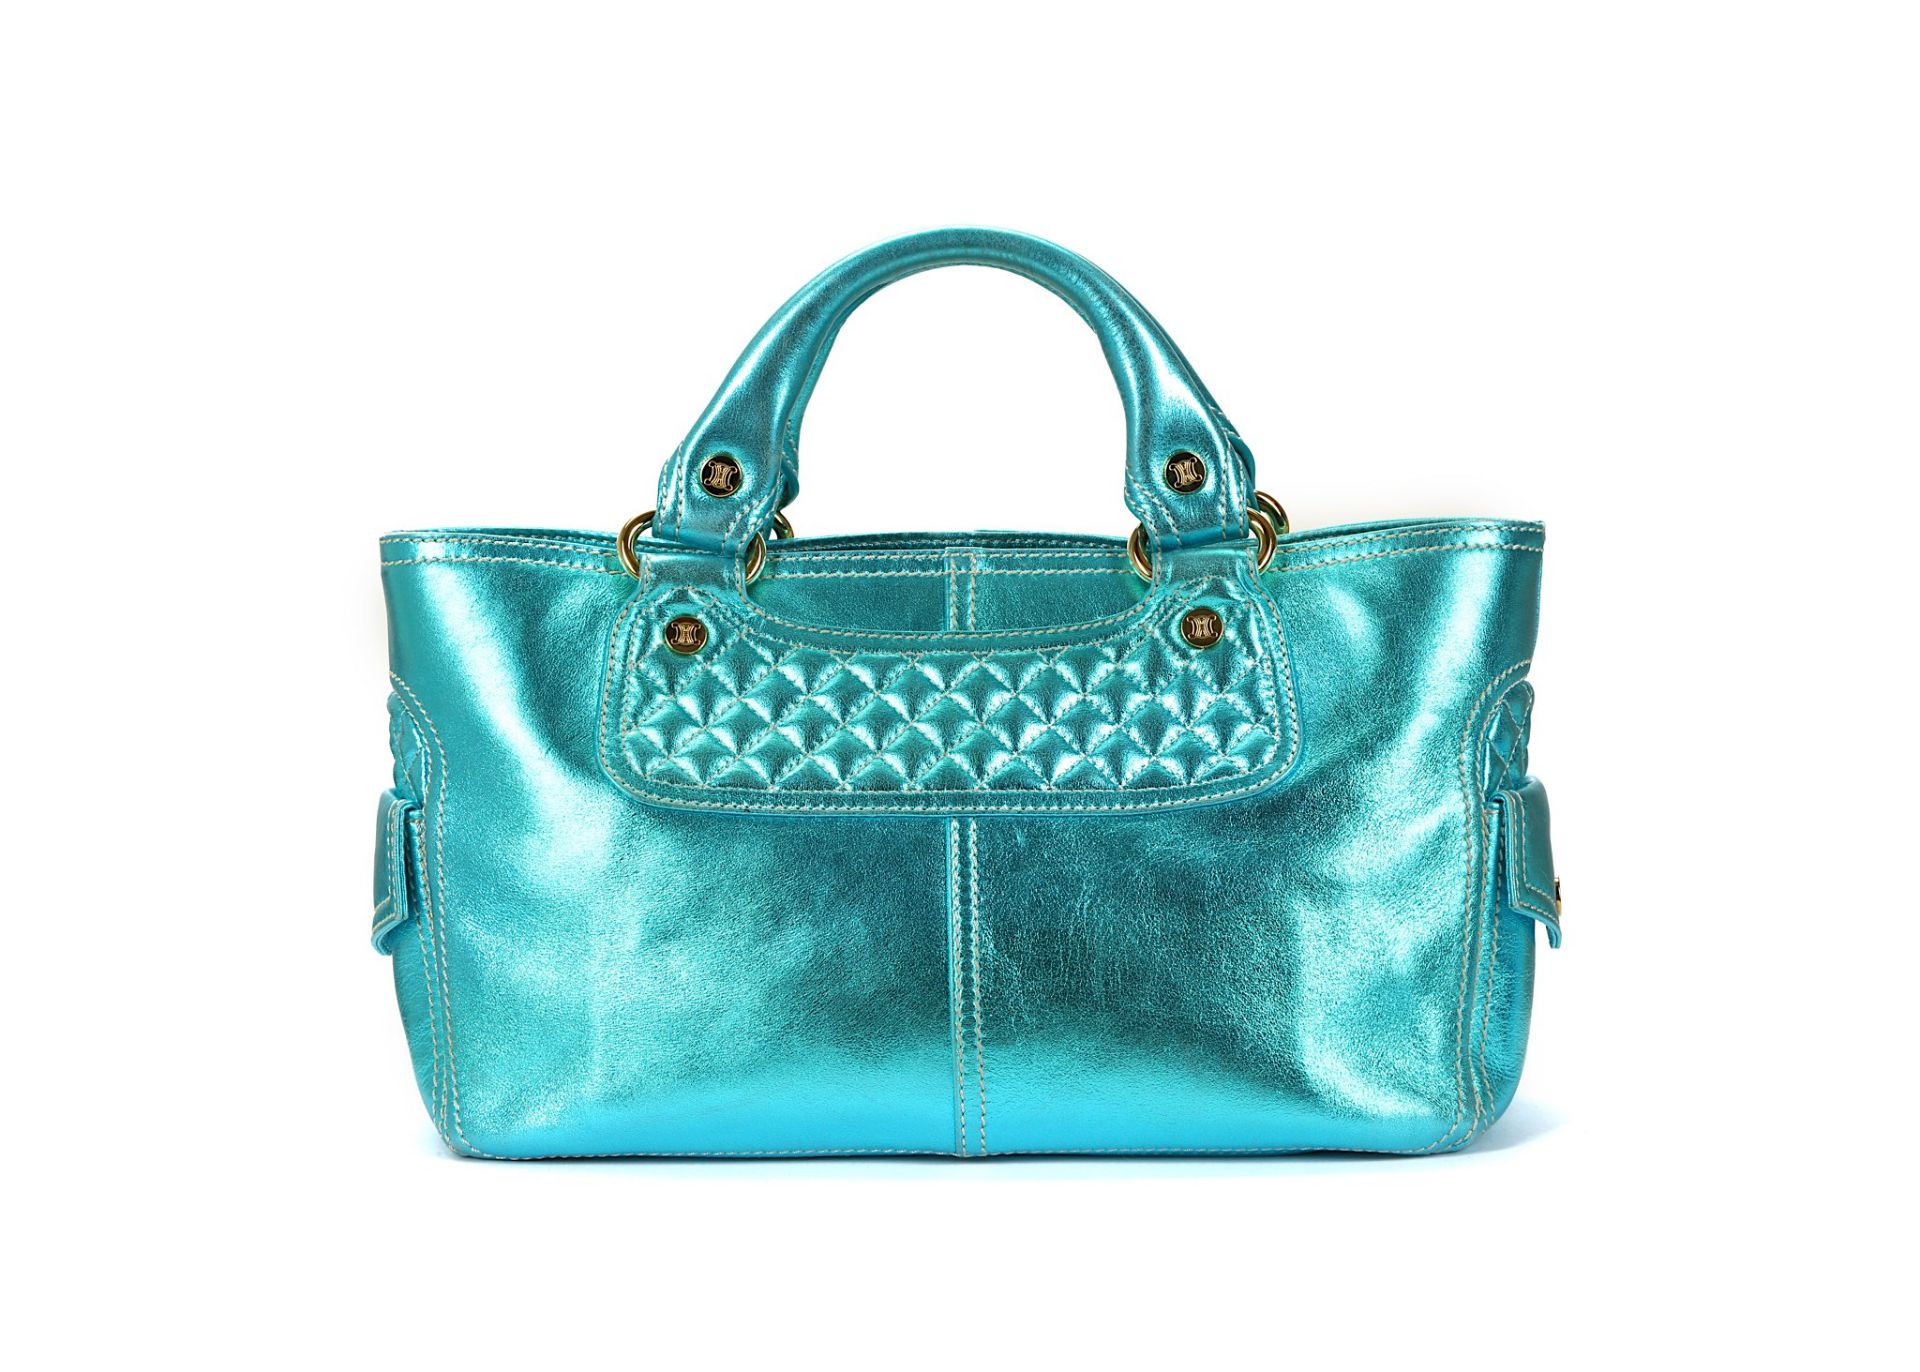 Celine Iridescent Blue Stitched Boogie Bag, gold t